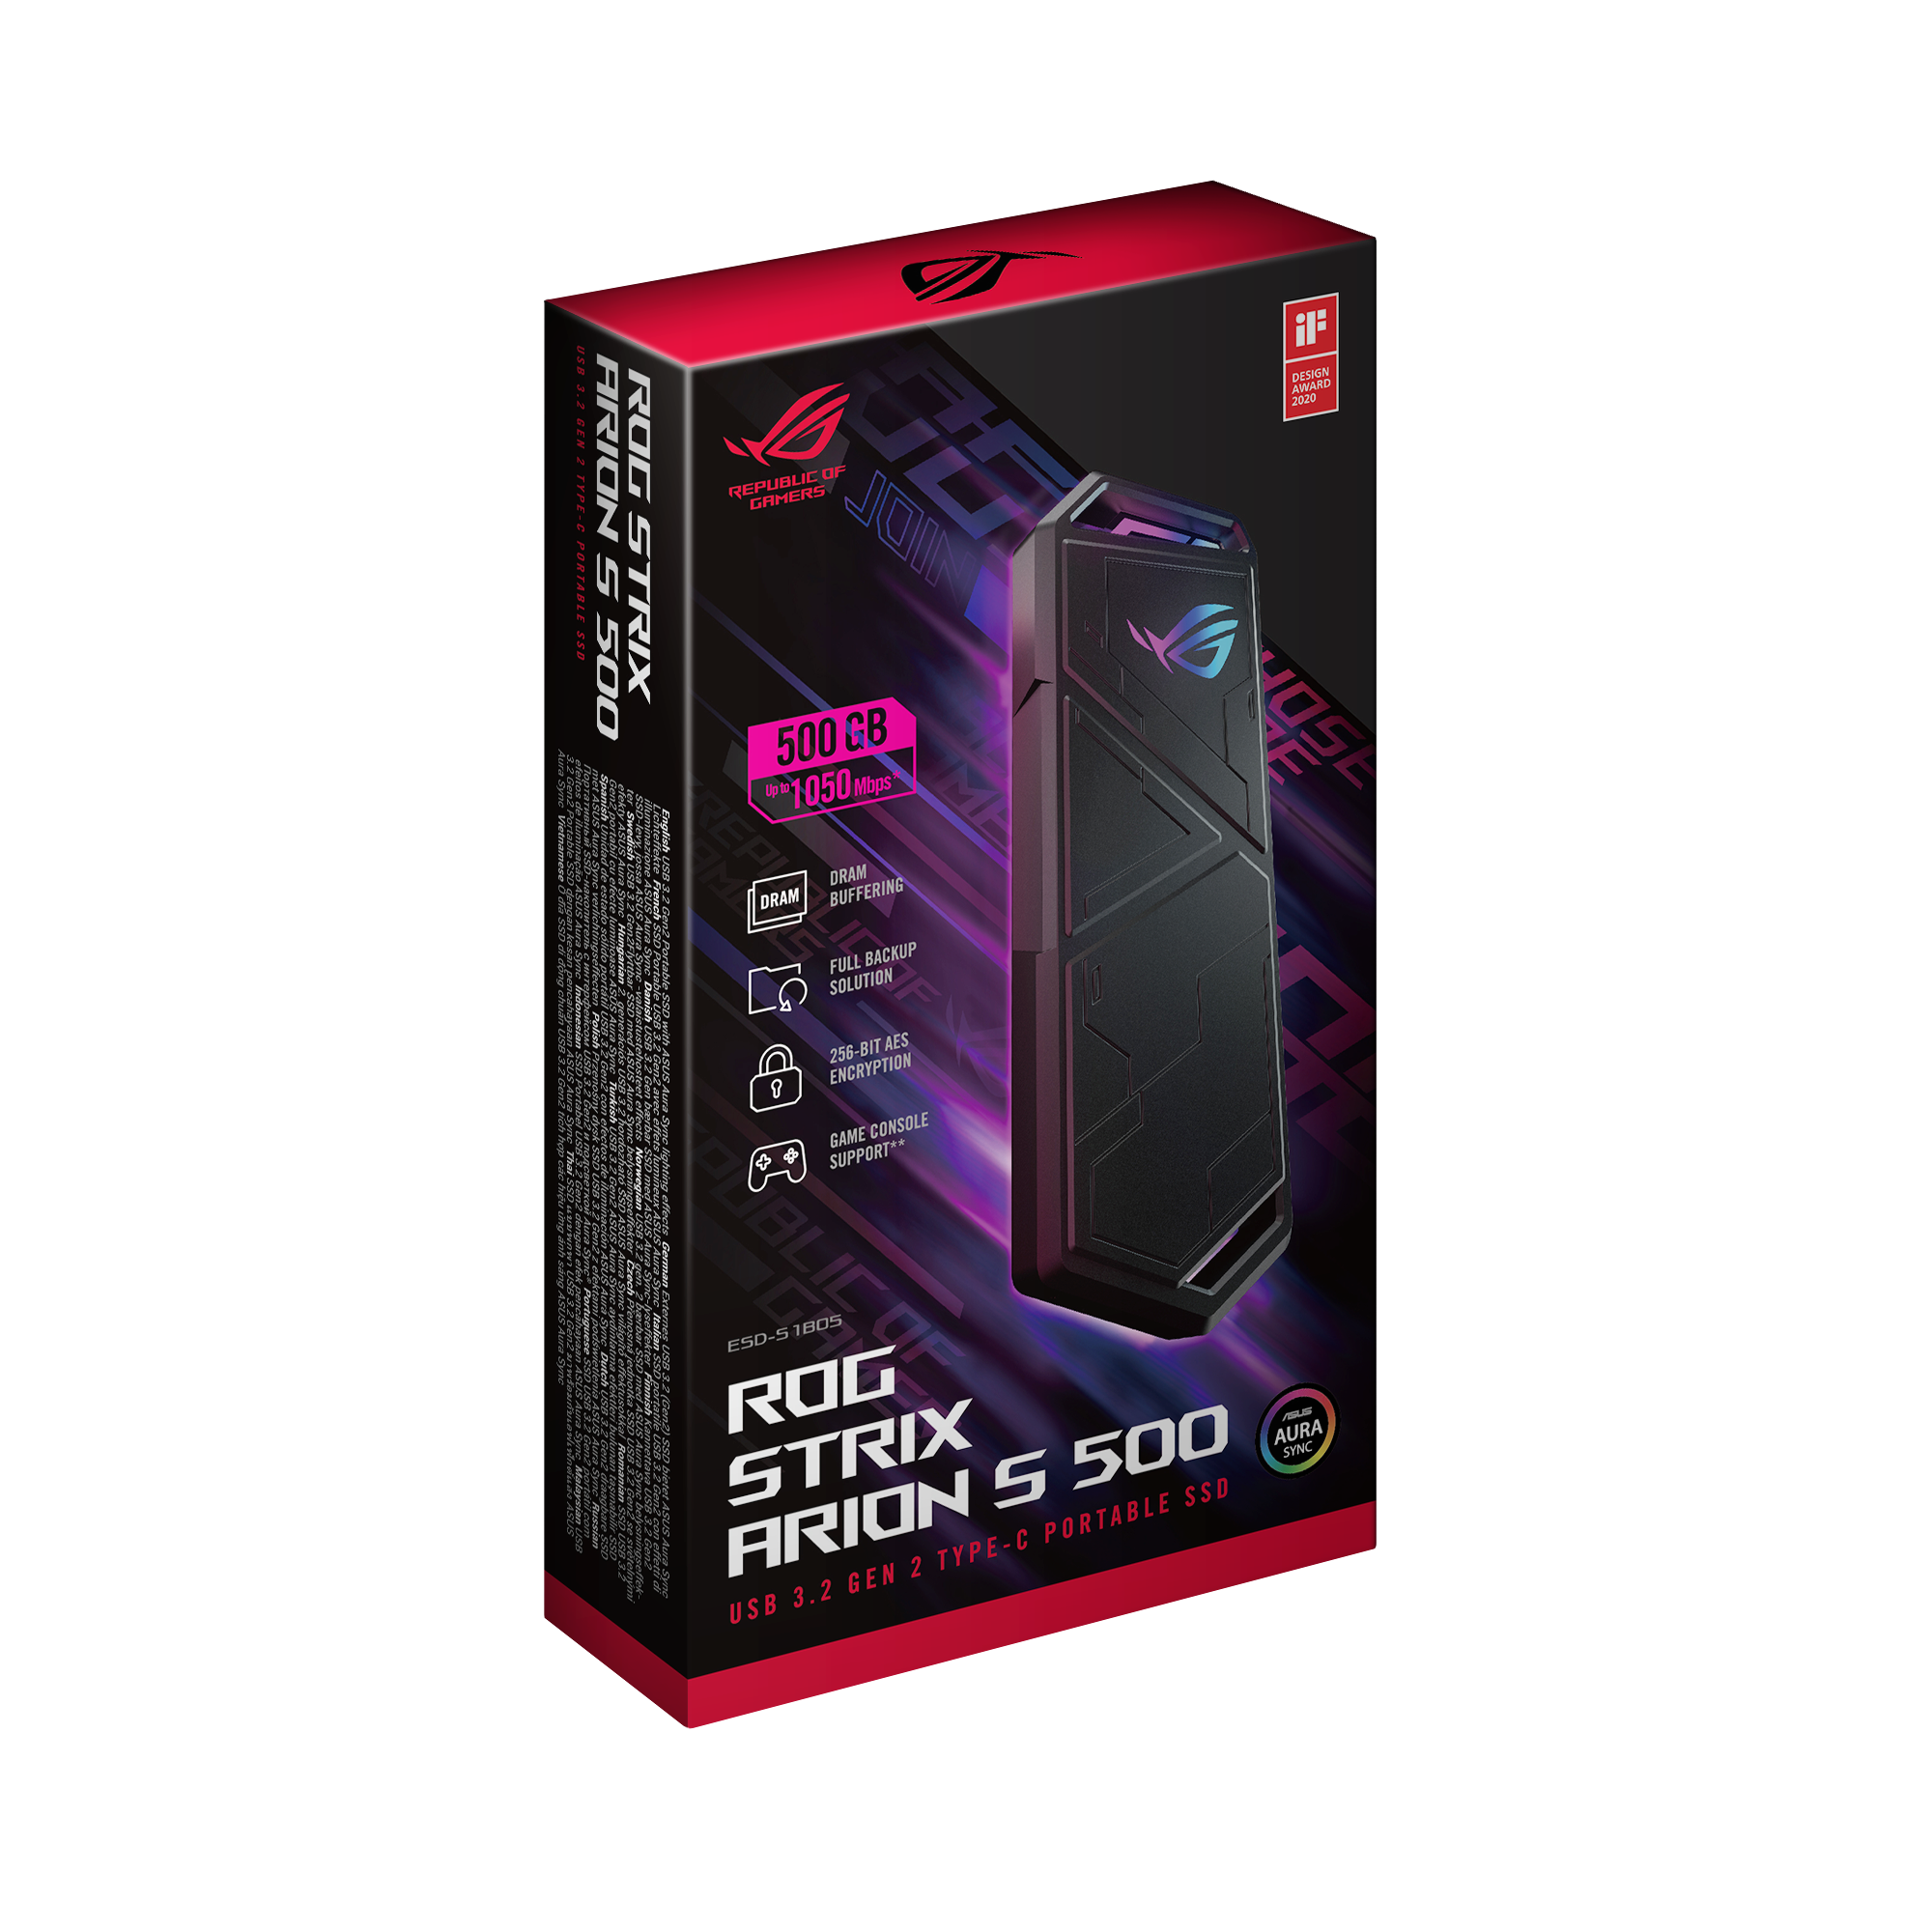 ASUS ROG STRIX Arion S500 Portable SSD thumbnail 3